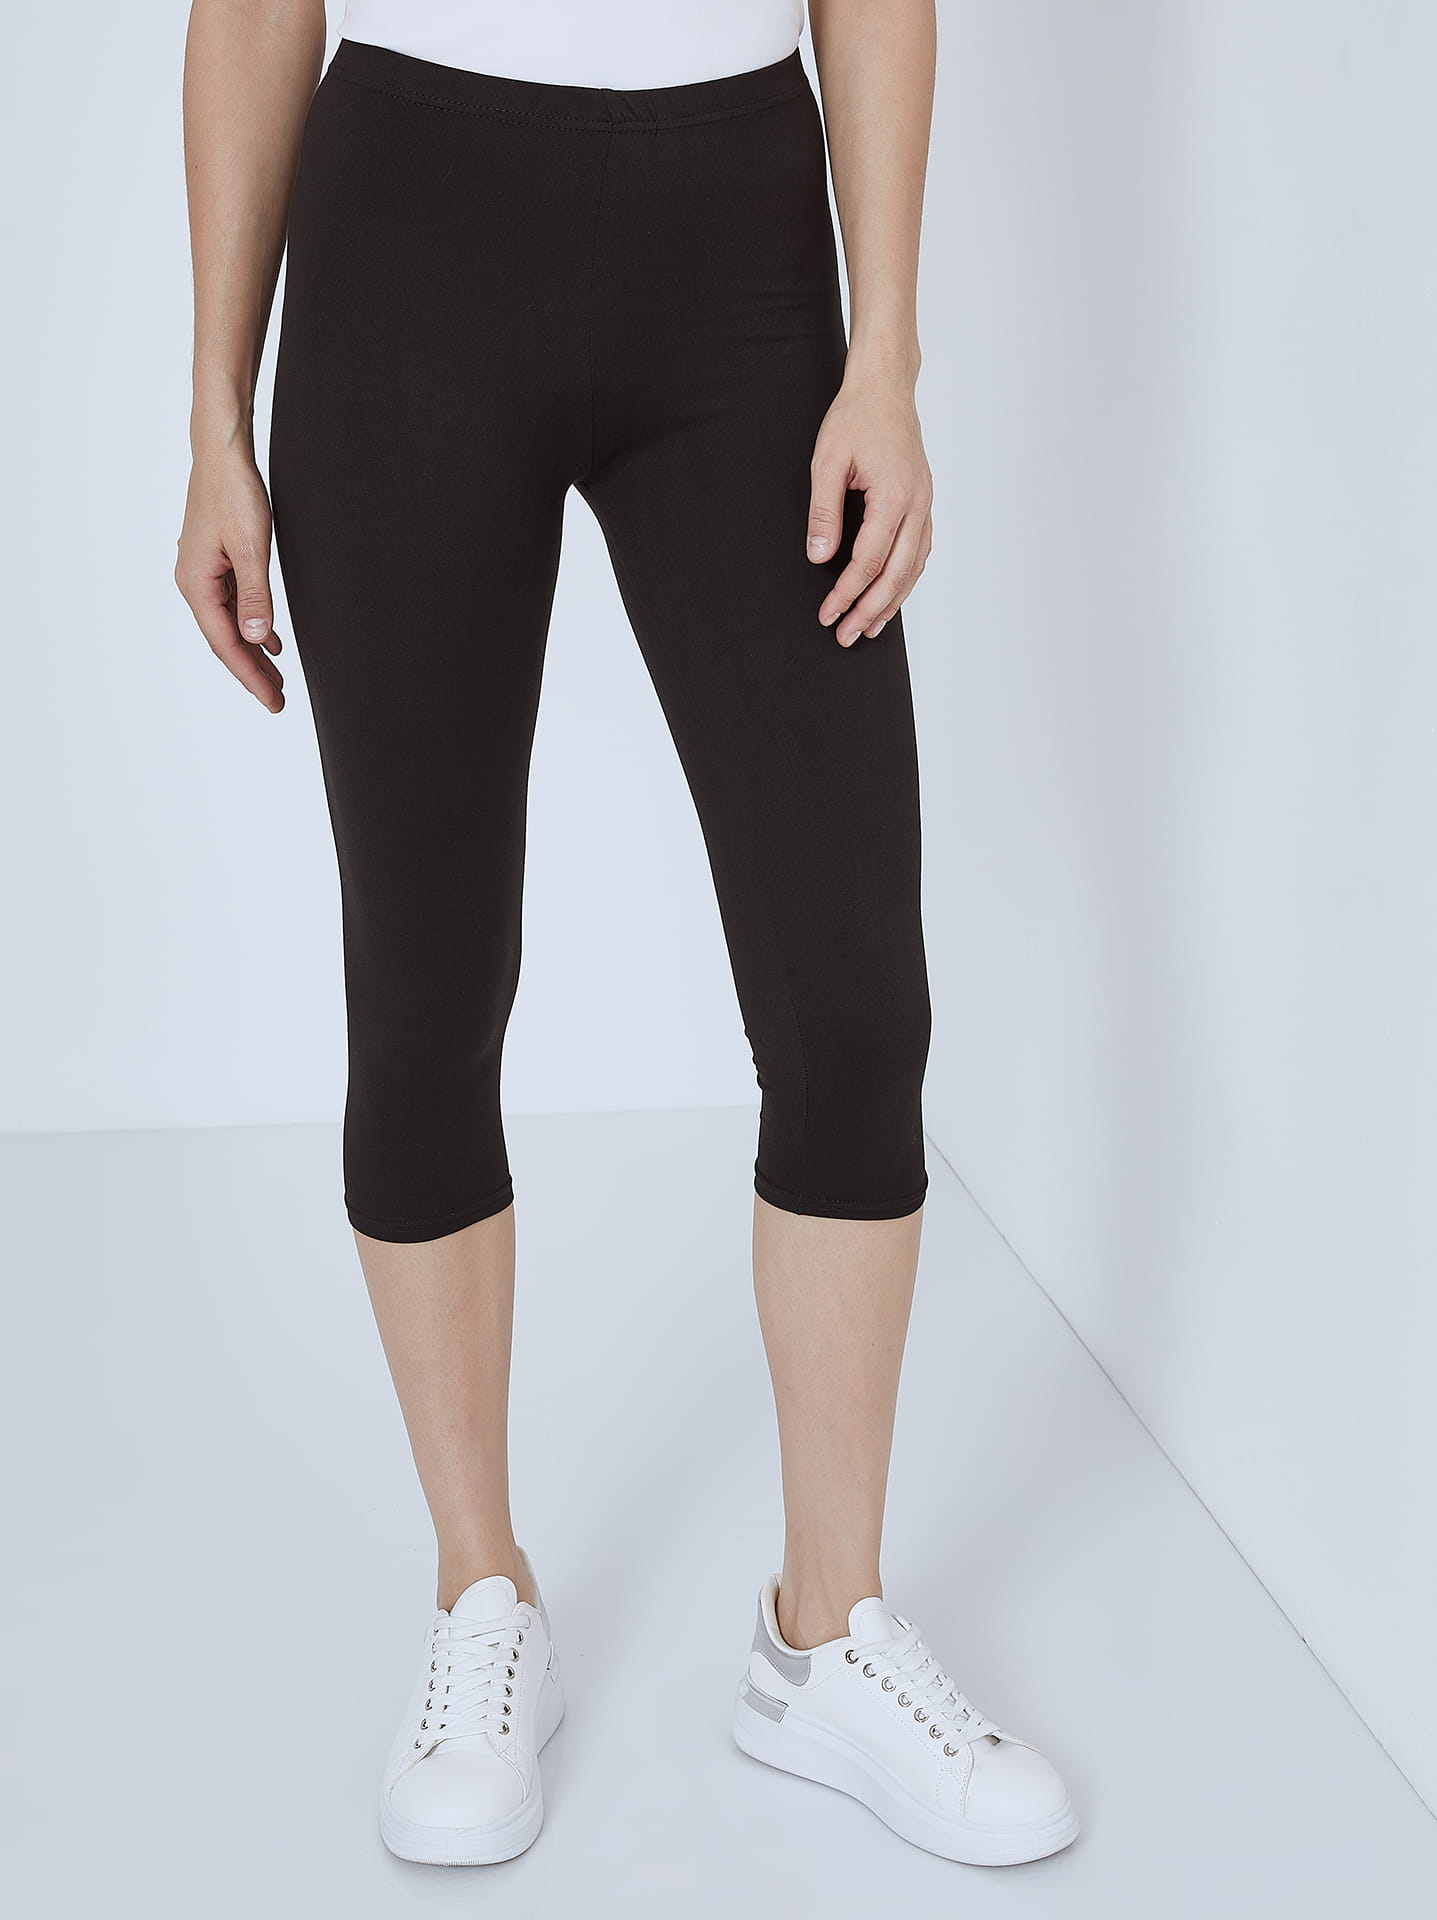 Capri leggings with elastic waistband in black, 6.99€